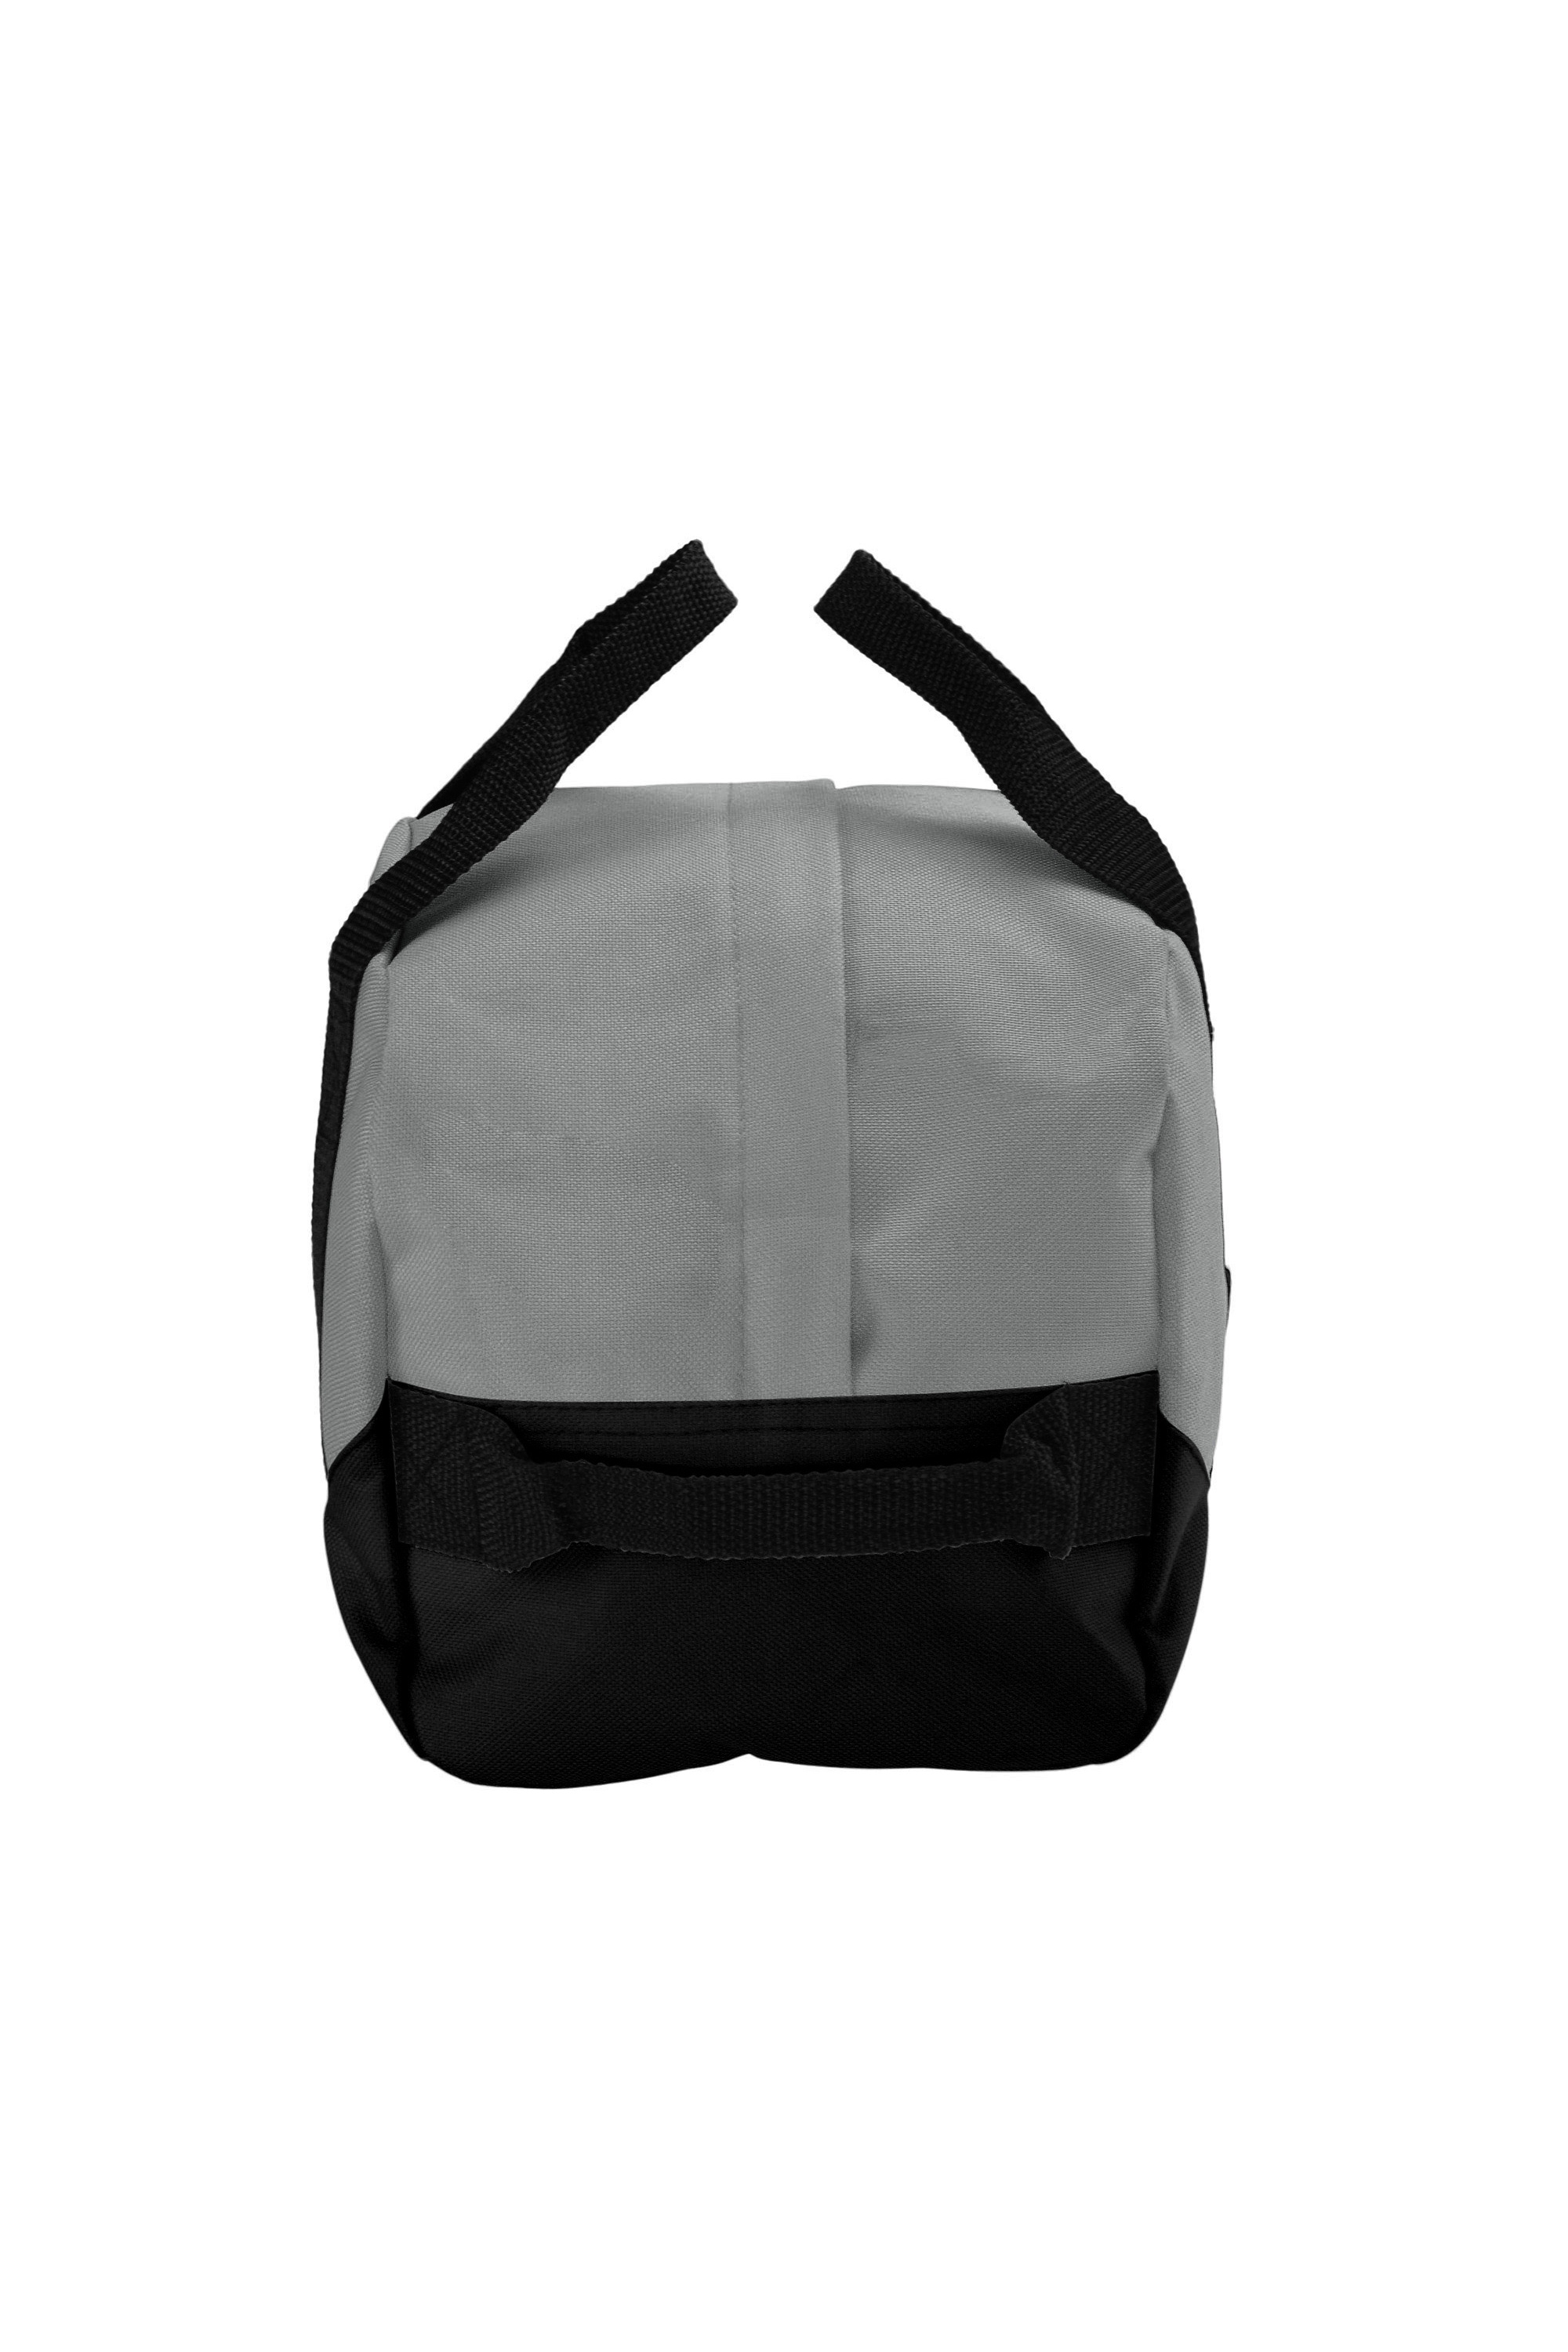 DALIX 12" Mini Duffel Bag Gym Duffle in Gray - image 2 of 8